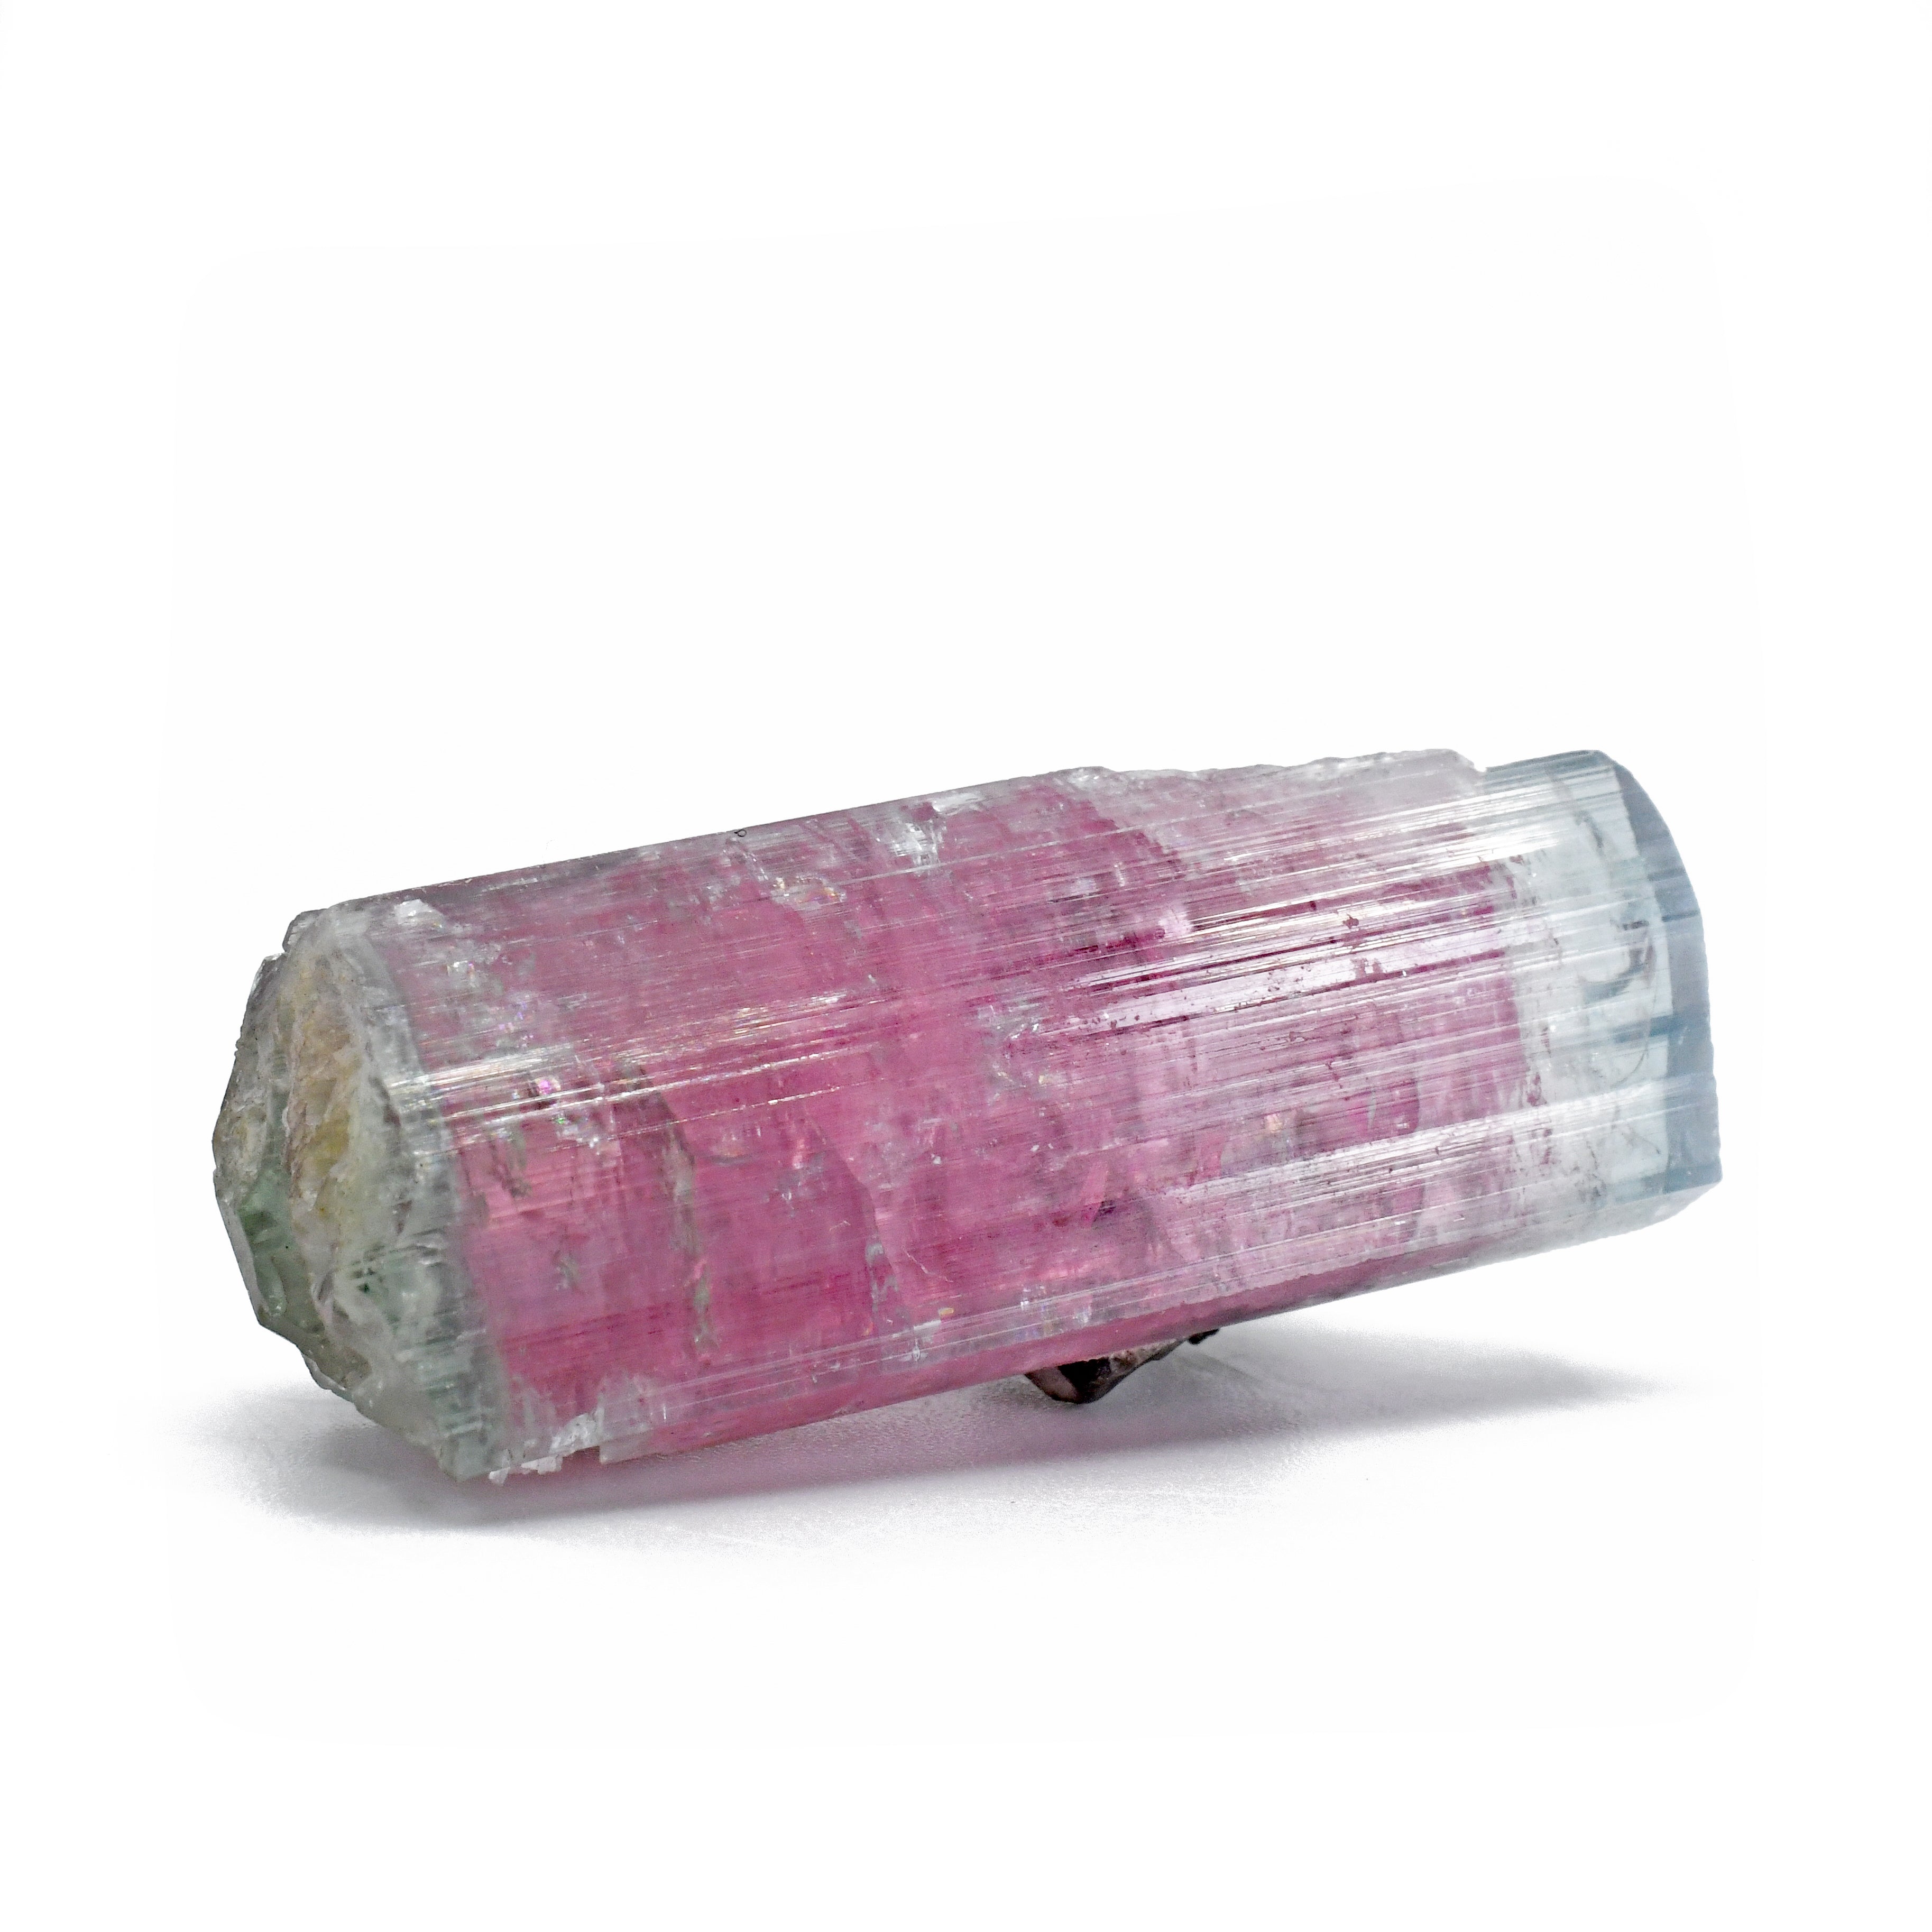 Tourmaline - Pink And Blue Watermelon Tourmaline Natural Double-Terminated Gem Crystal-Pakistan - ZX-406 - Crystalarium